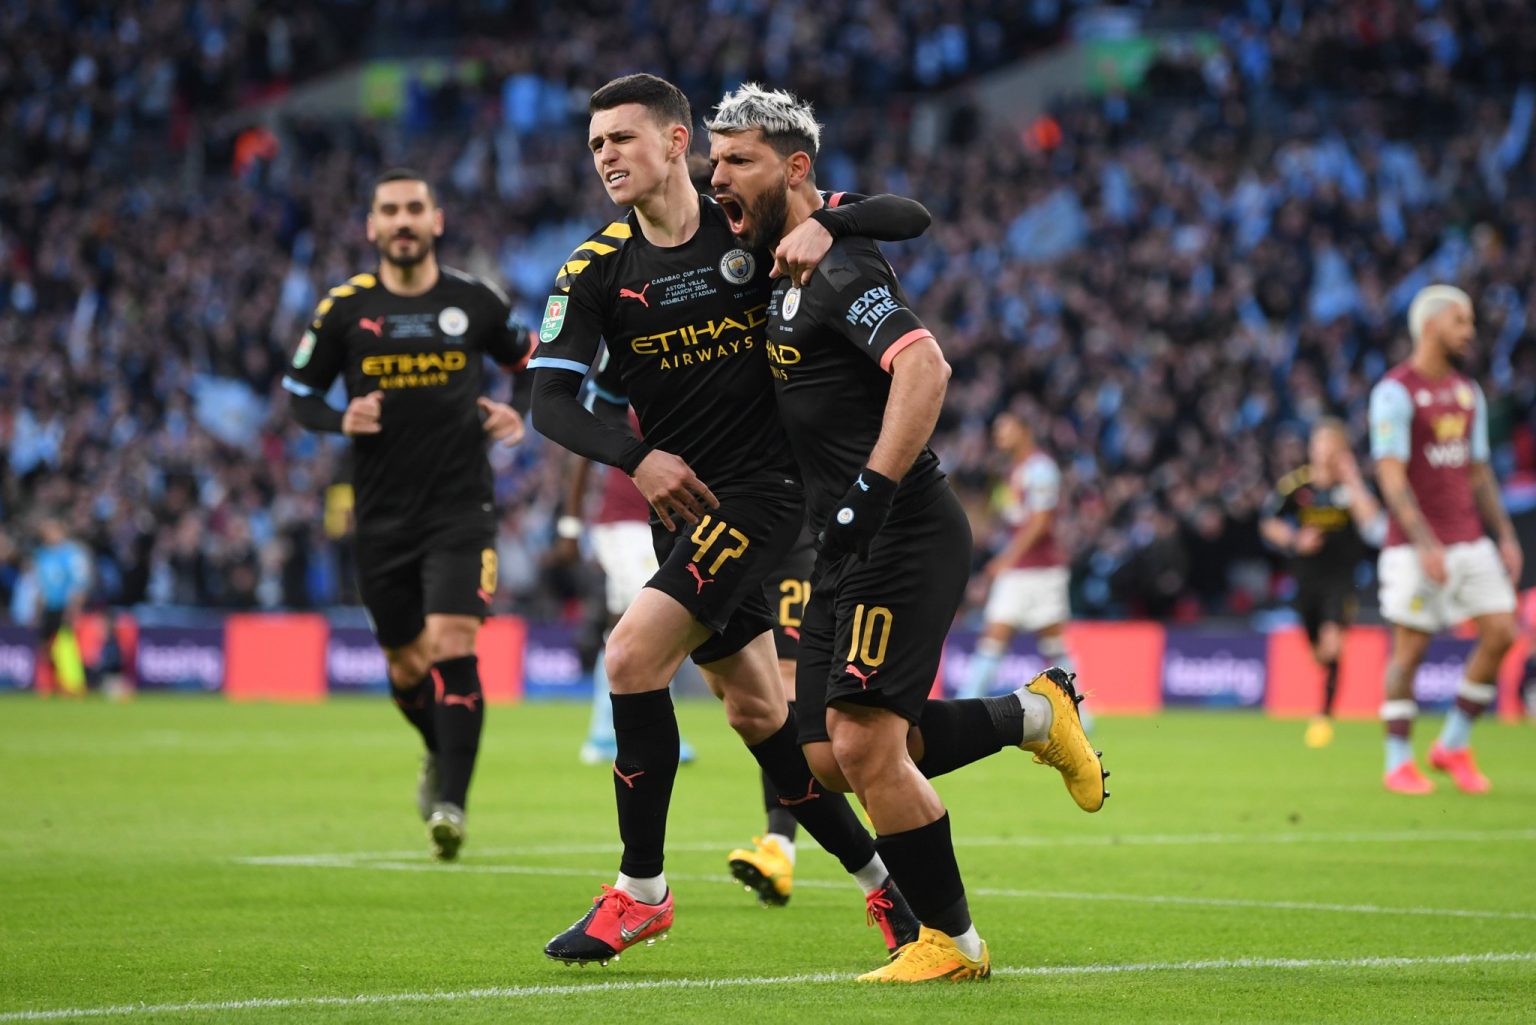 Carabao Cup Final: Manchester City claim third consecutive League Cup